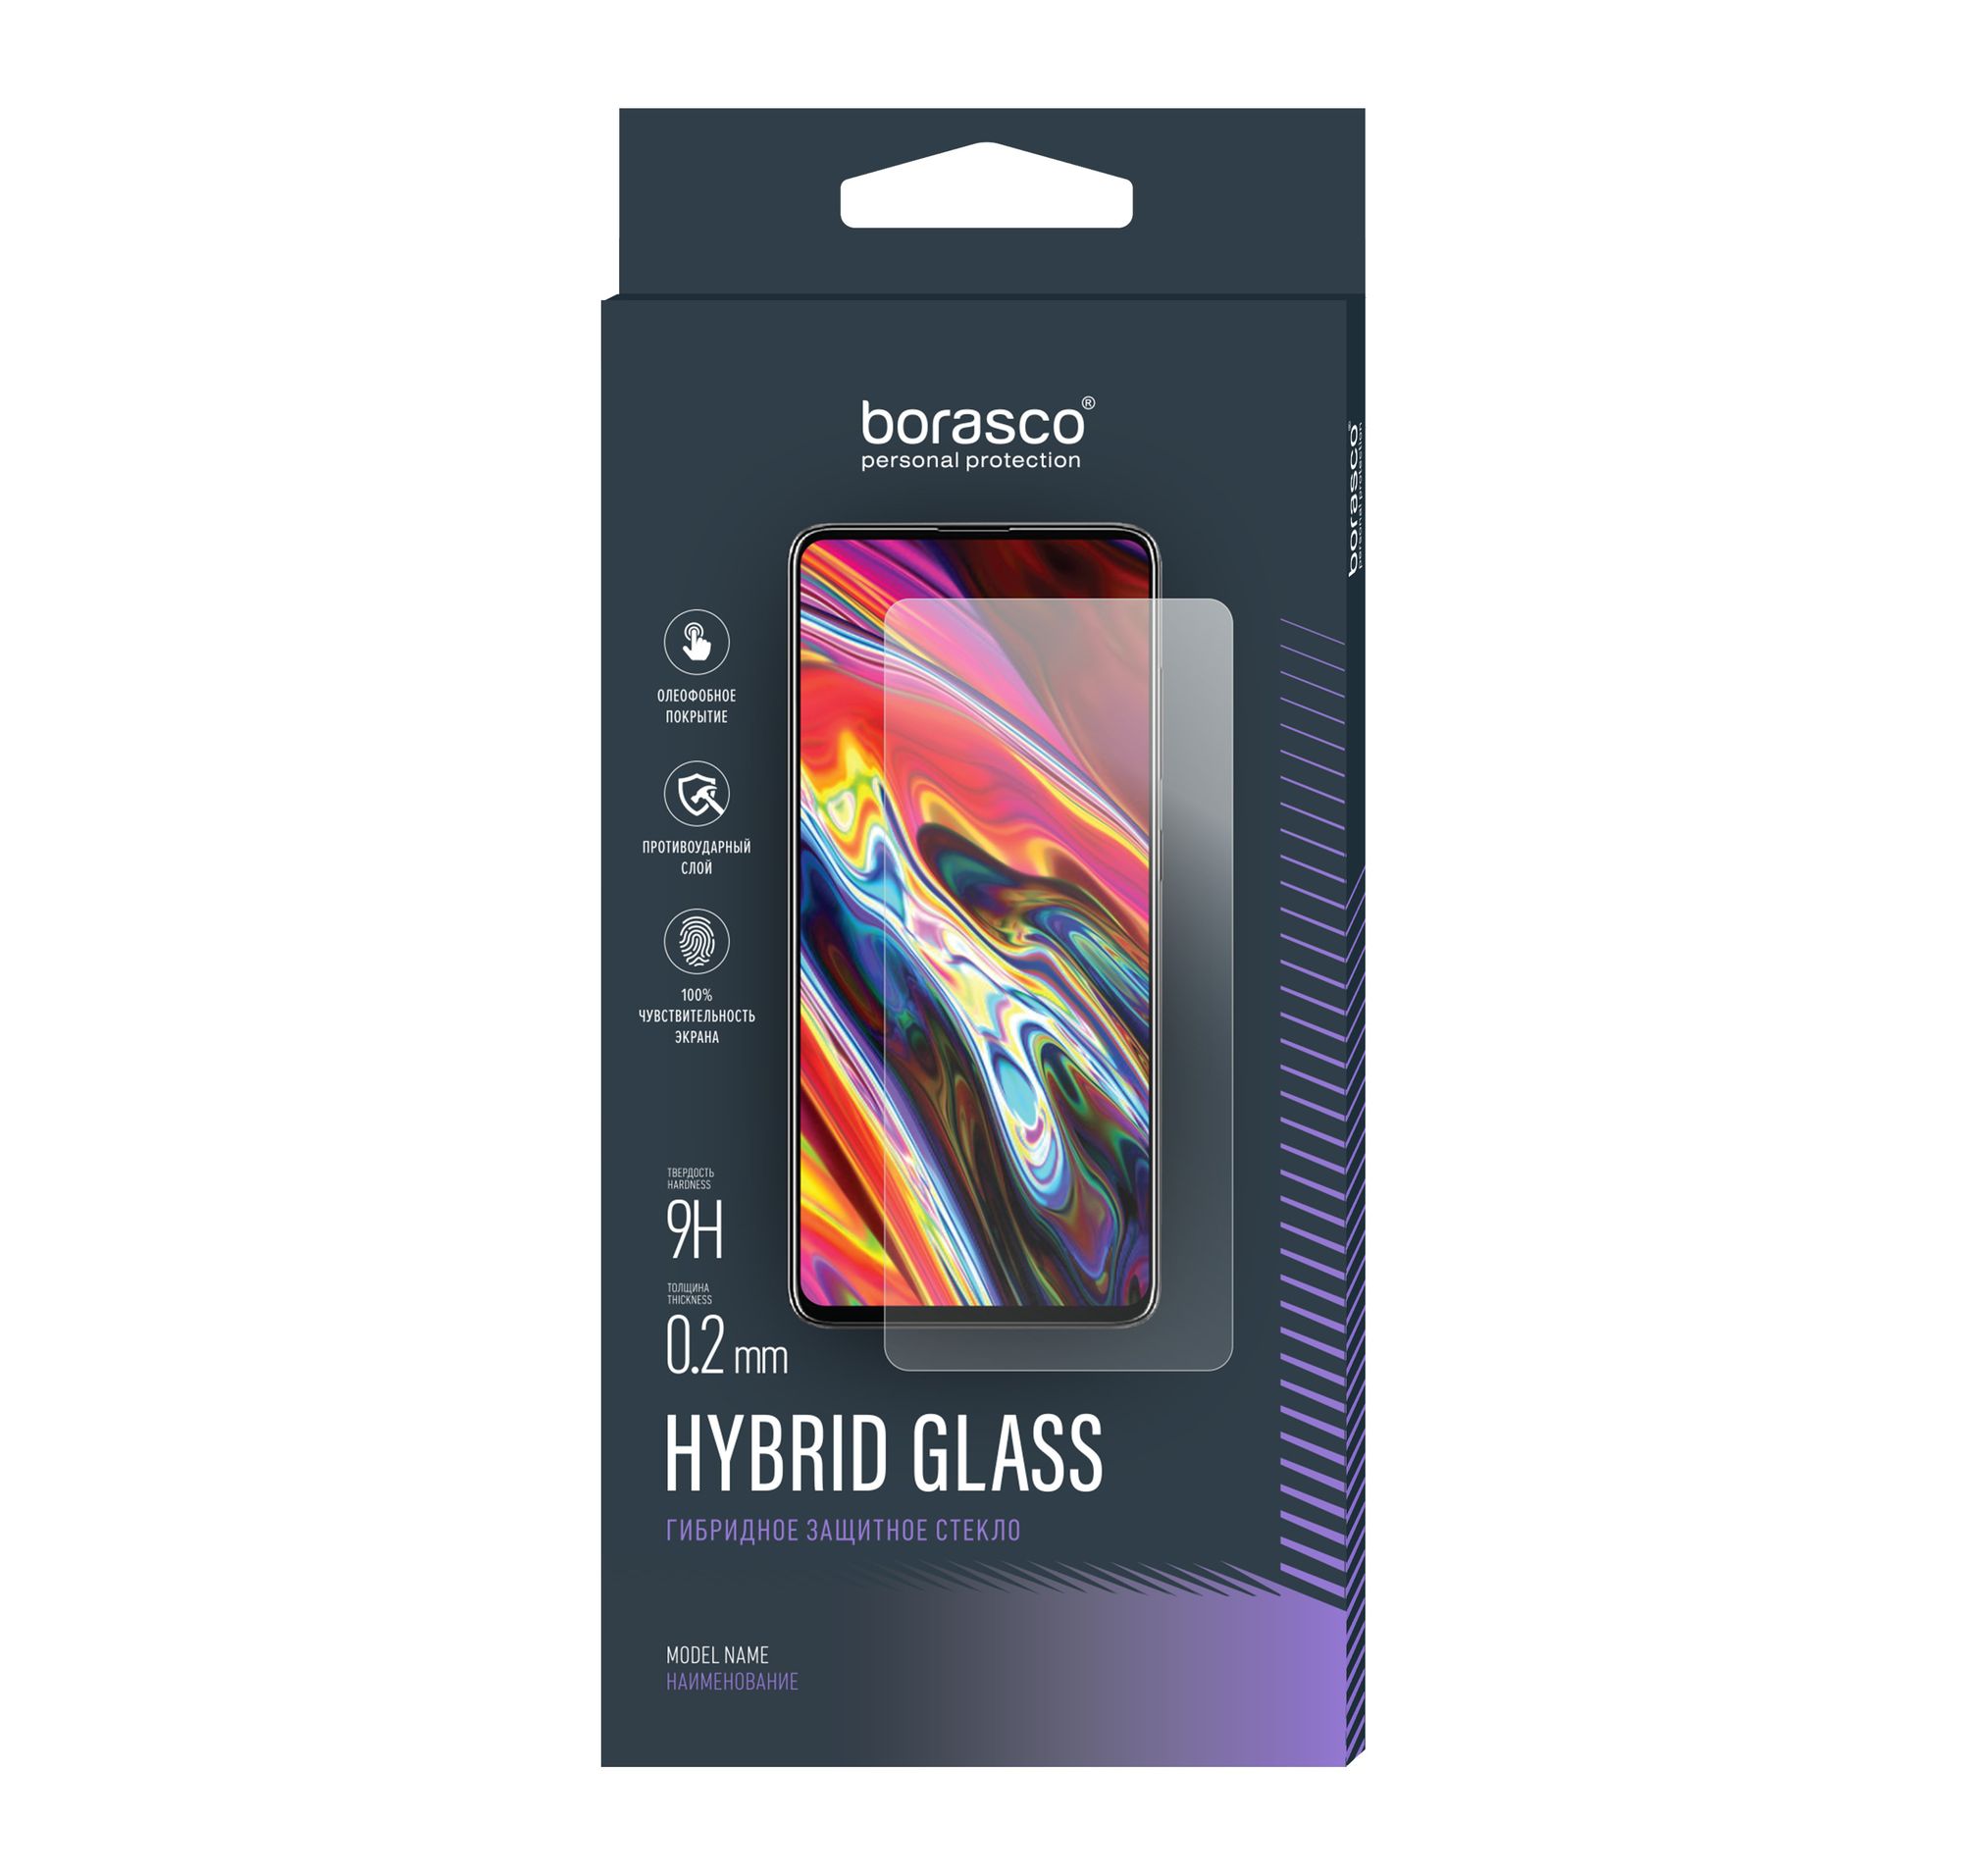 Стекло защитное Hybrid Glass VSP 0,26 мм для Meizu M3 Max стекло защитное hybrid glass vsp 0 26 мм для asus zenfone 4 max m1 zb555kl